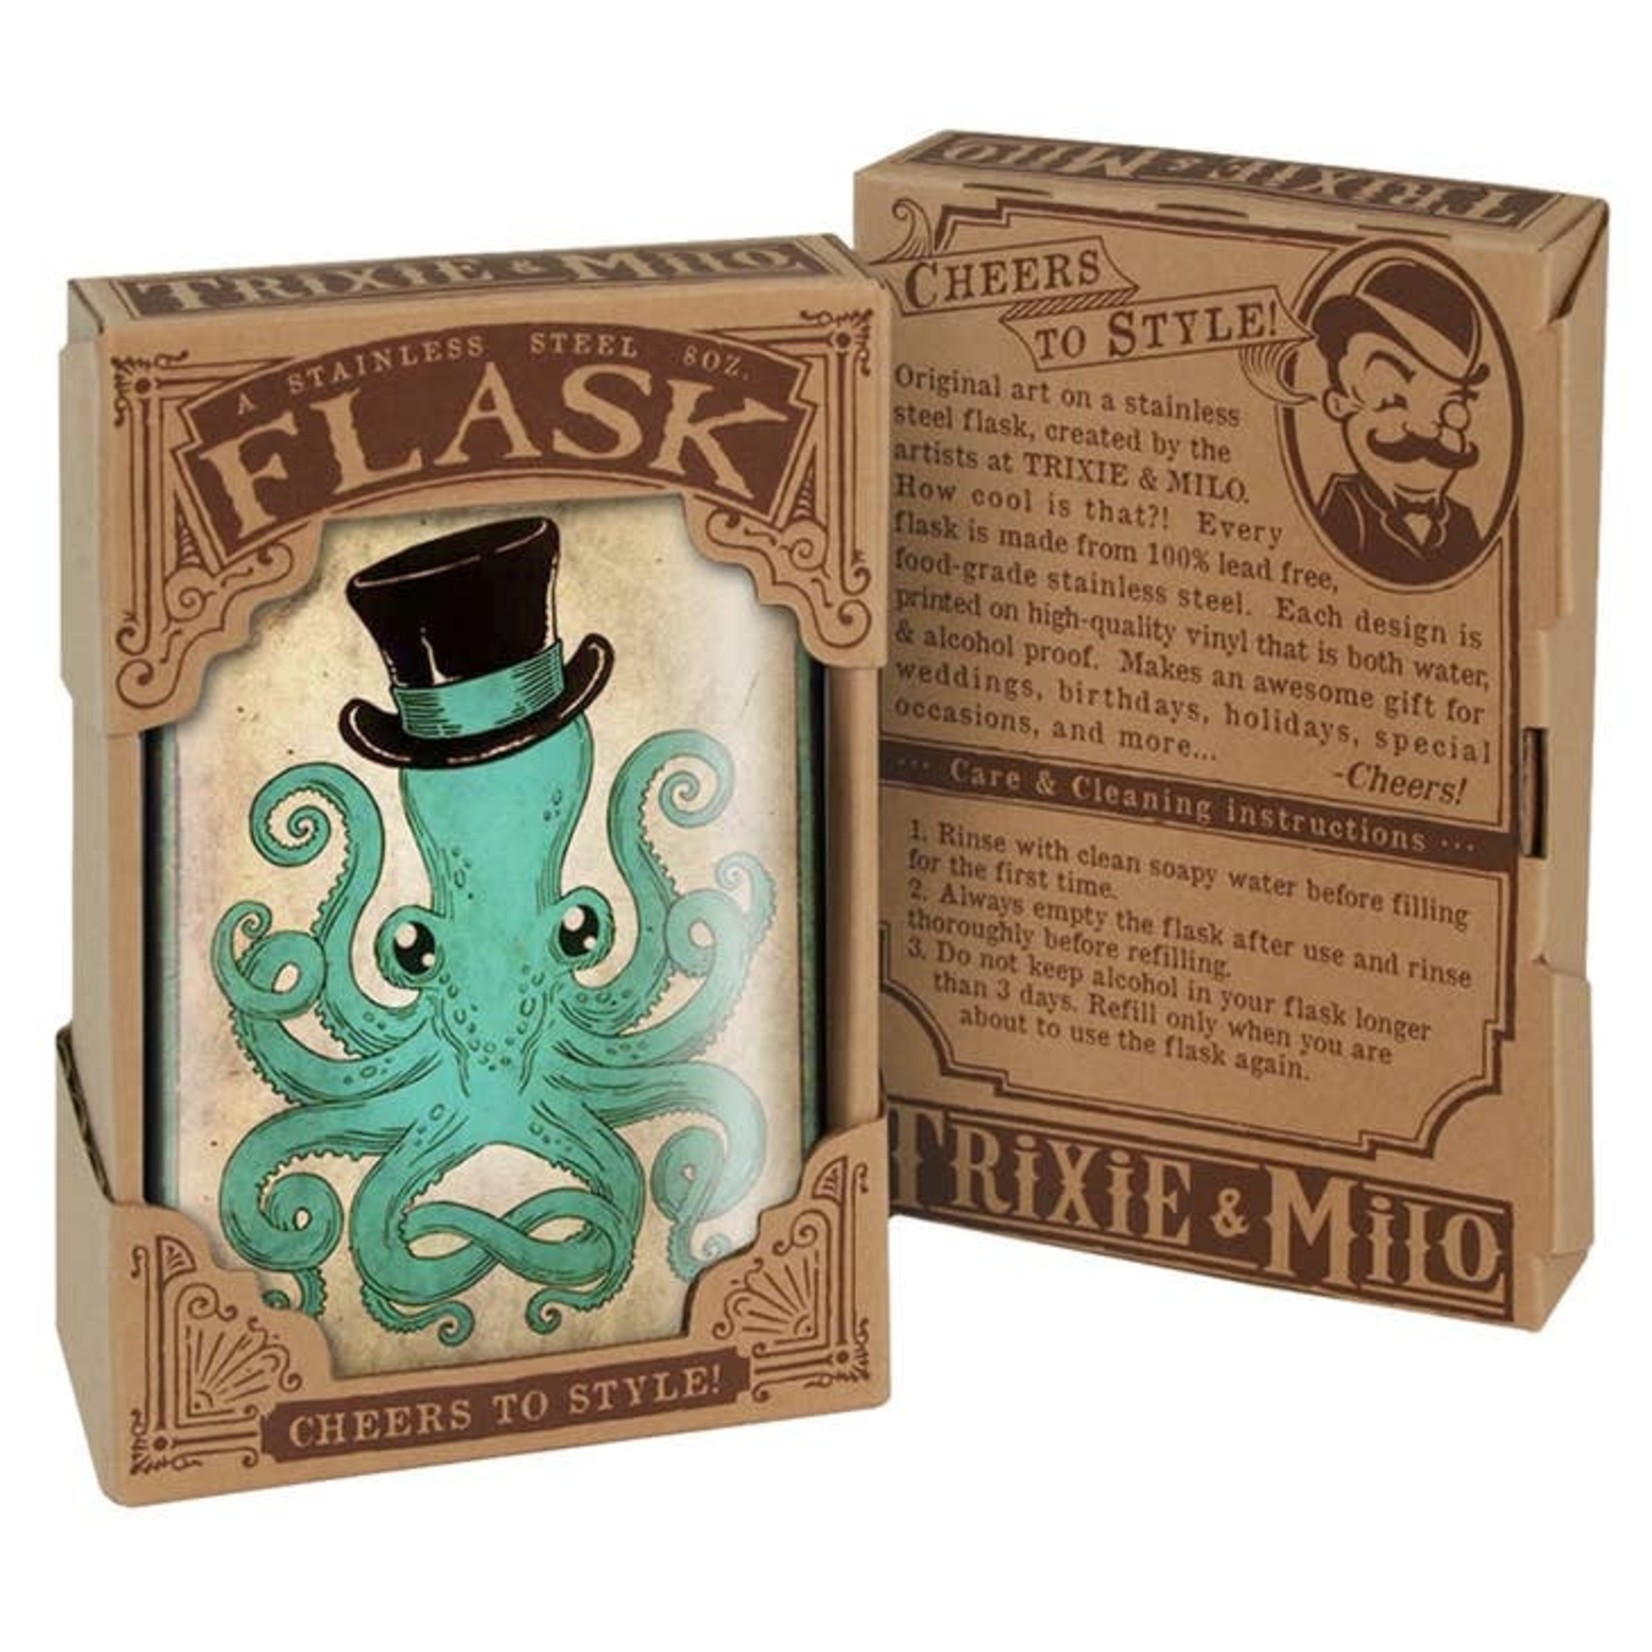 Trixie & Milo Trixie & Milo Gentleman Octopus Flask